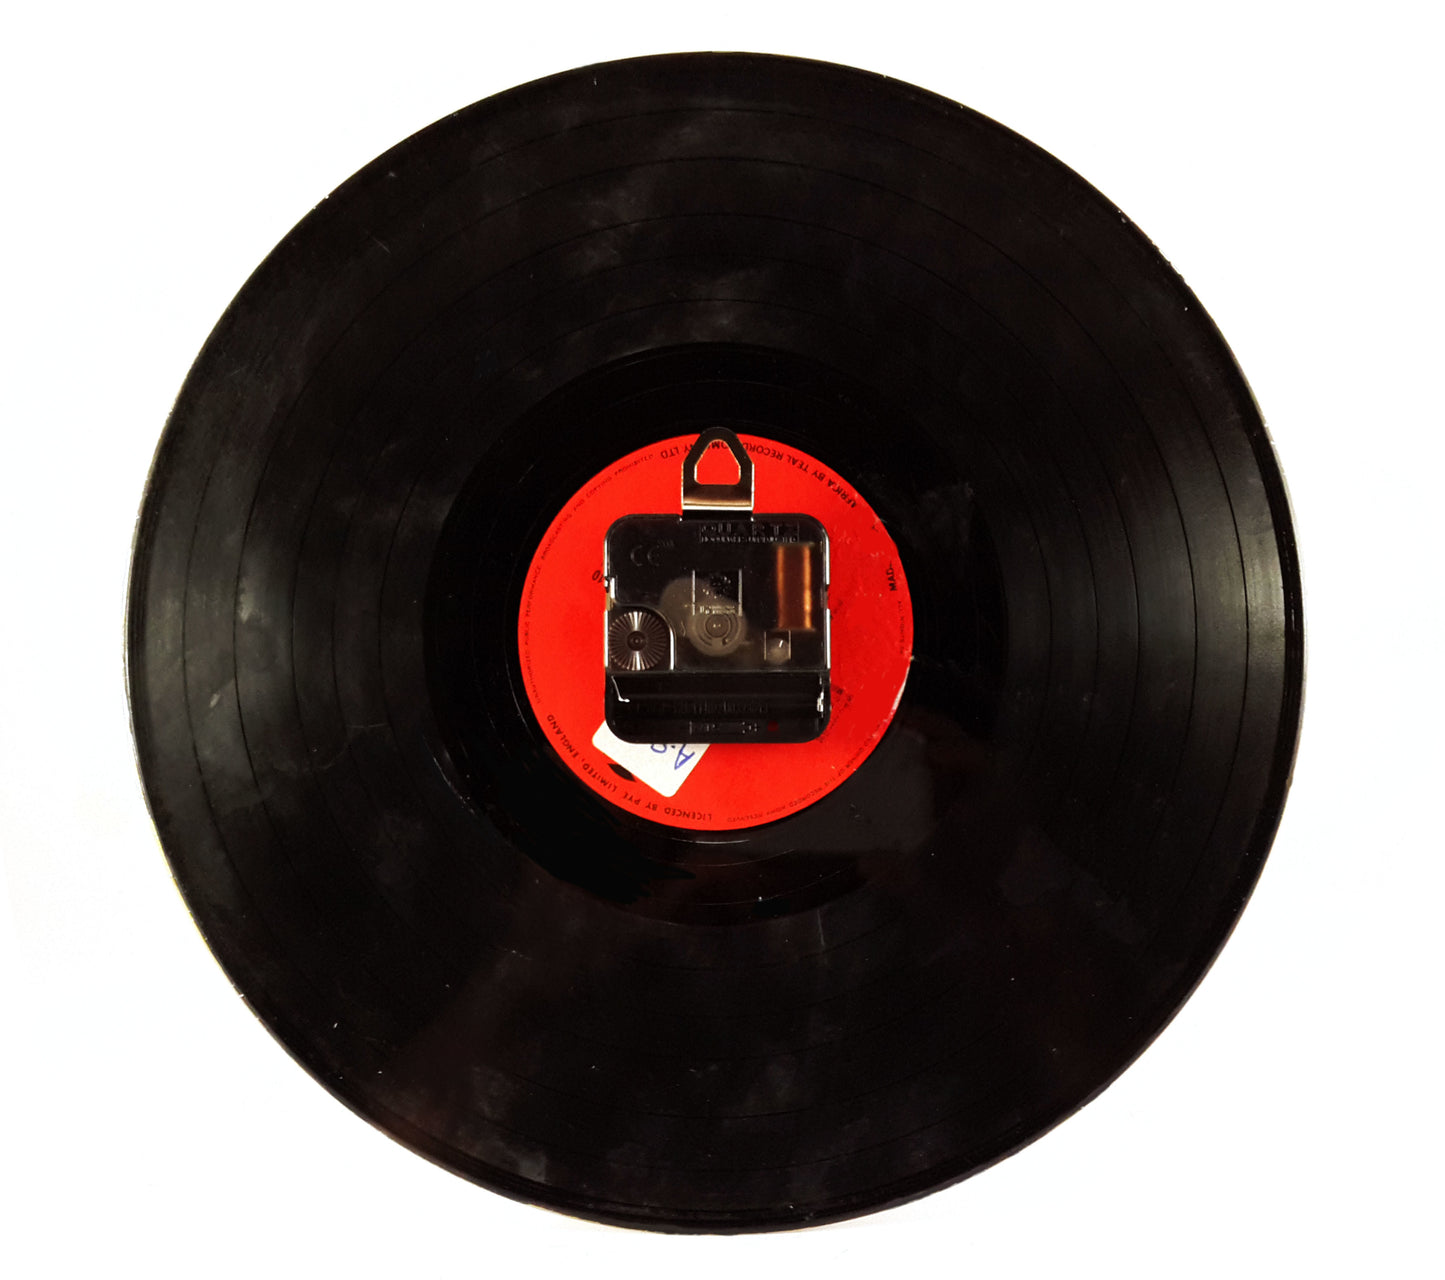  The Sharks Vinyl Clock freeshipping - Pubstuff 391.00